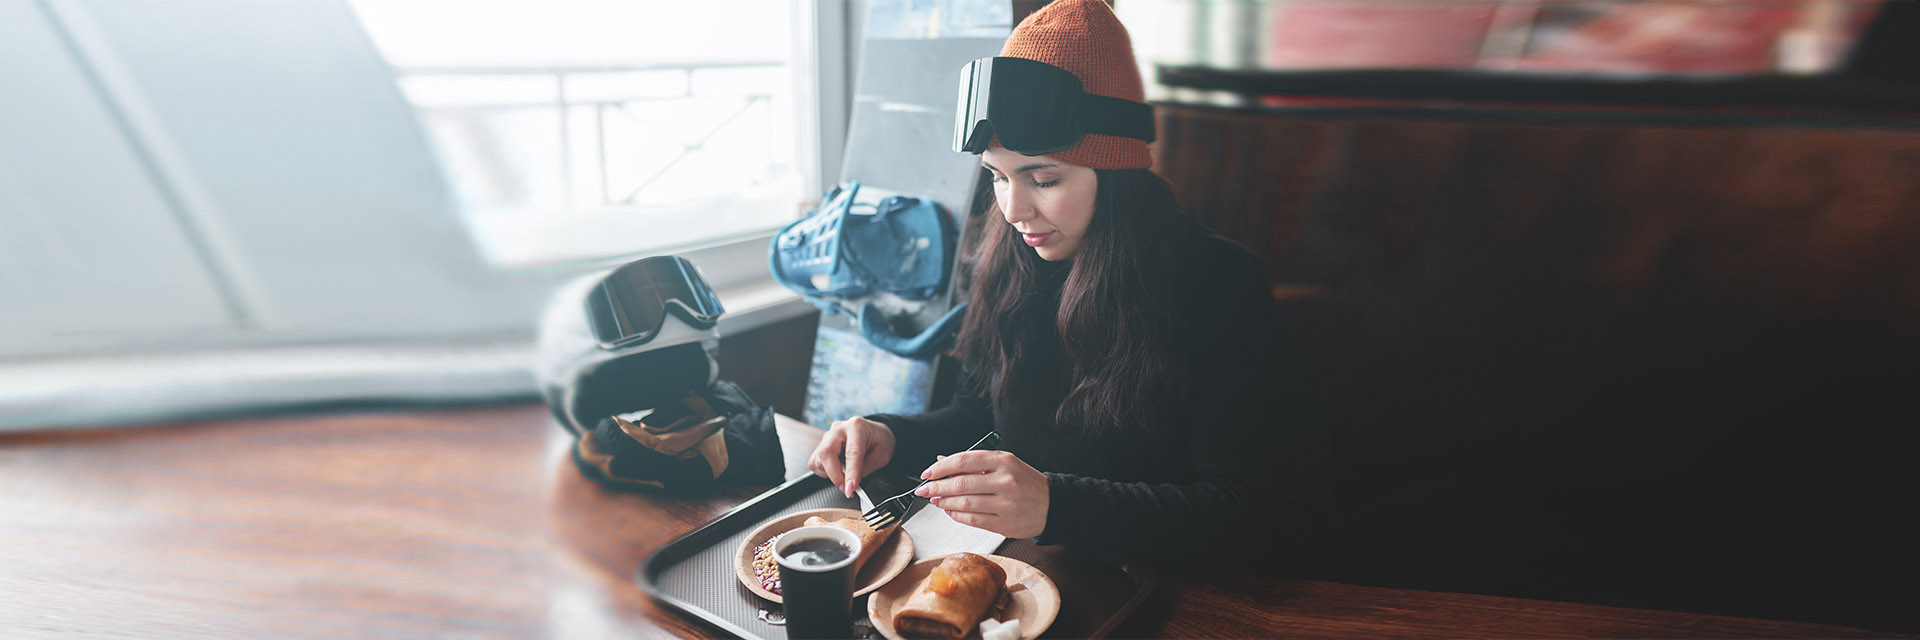 Woman in ski clothes having breakfast